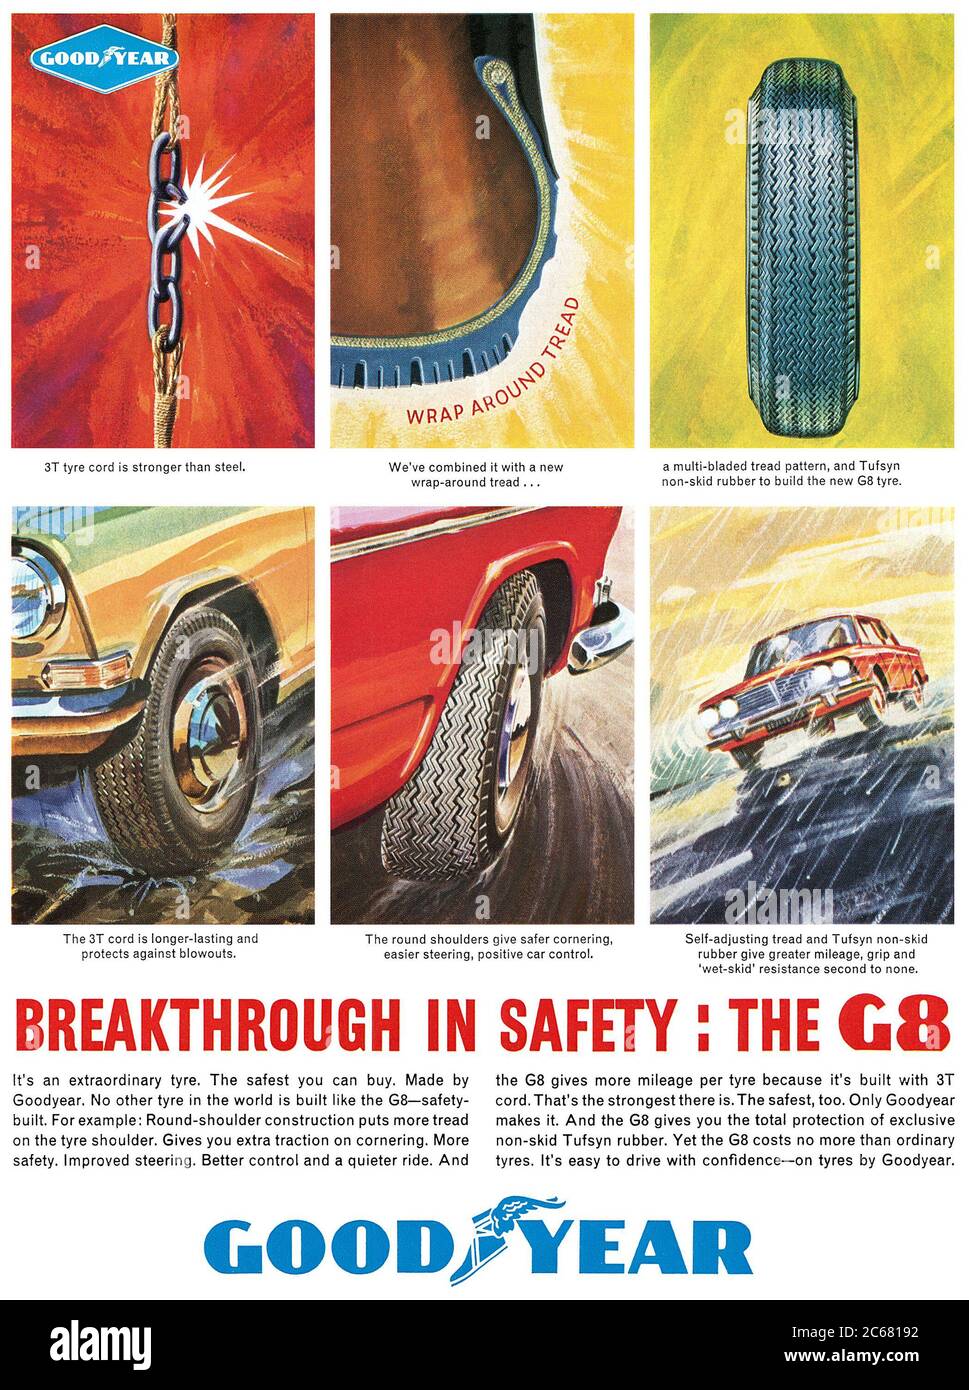 1965 Pubblicità britannica per pneumatici Goodyear. Foto Stock